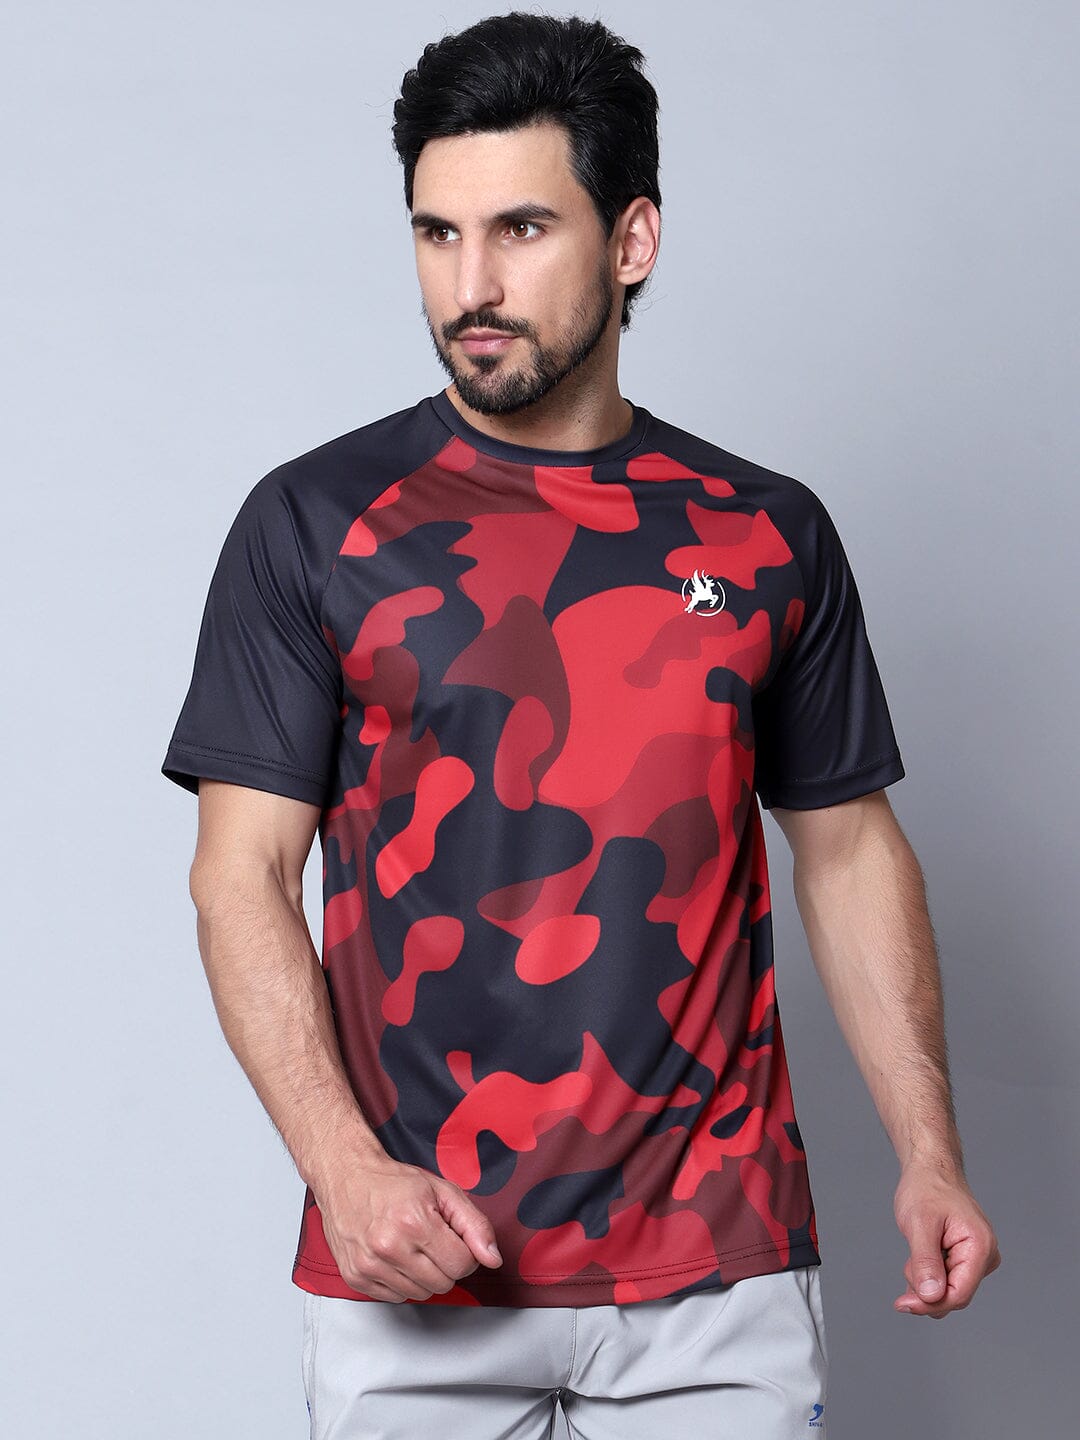 StealthFlex Camo Athletic Tshirt Black/Red - trenz